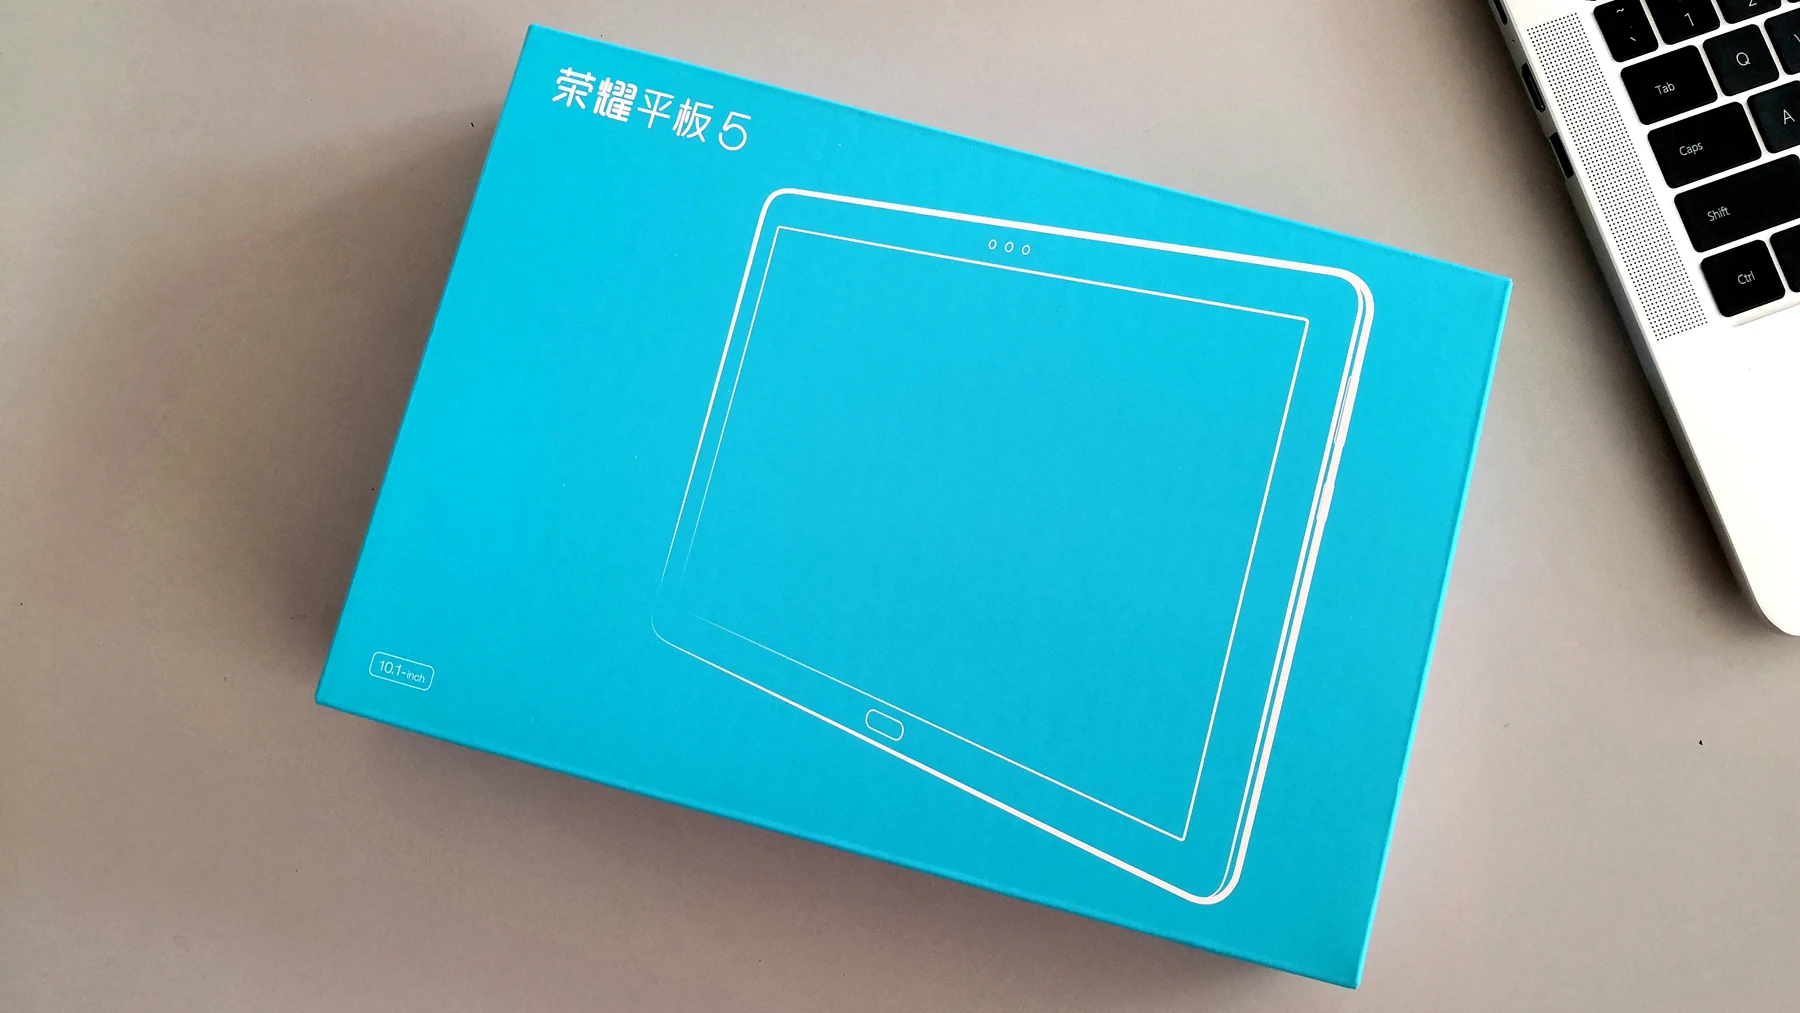 Huawei MediaPad T5 huawei honor T5 Kirin 659 Восьмиядерный 10 дюймов 3G/4G ram 32G/64G rom wifi/LTE huawei honor T5 android планшет